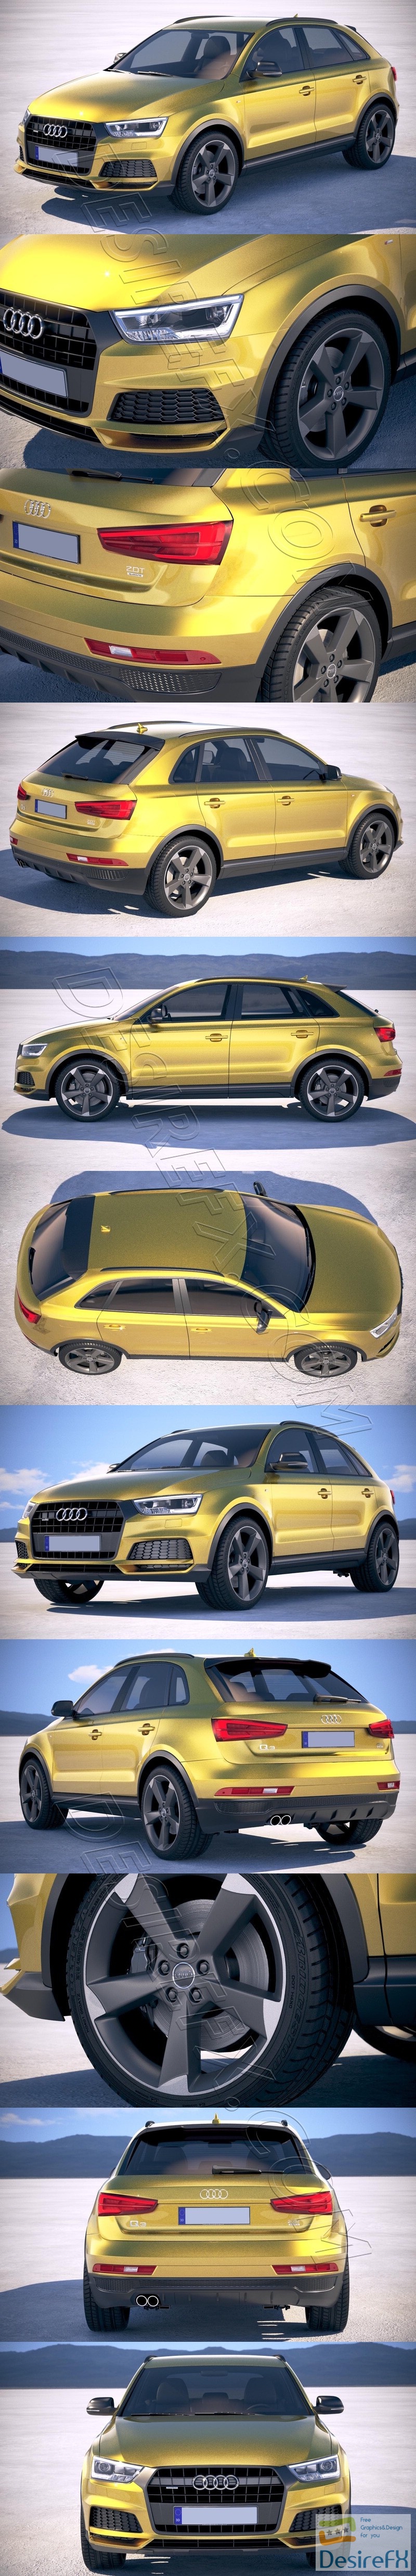 Audi Q3 2019 3D Model